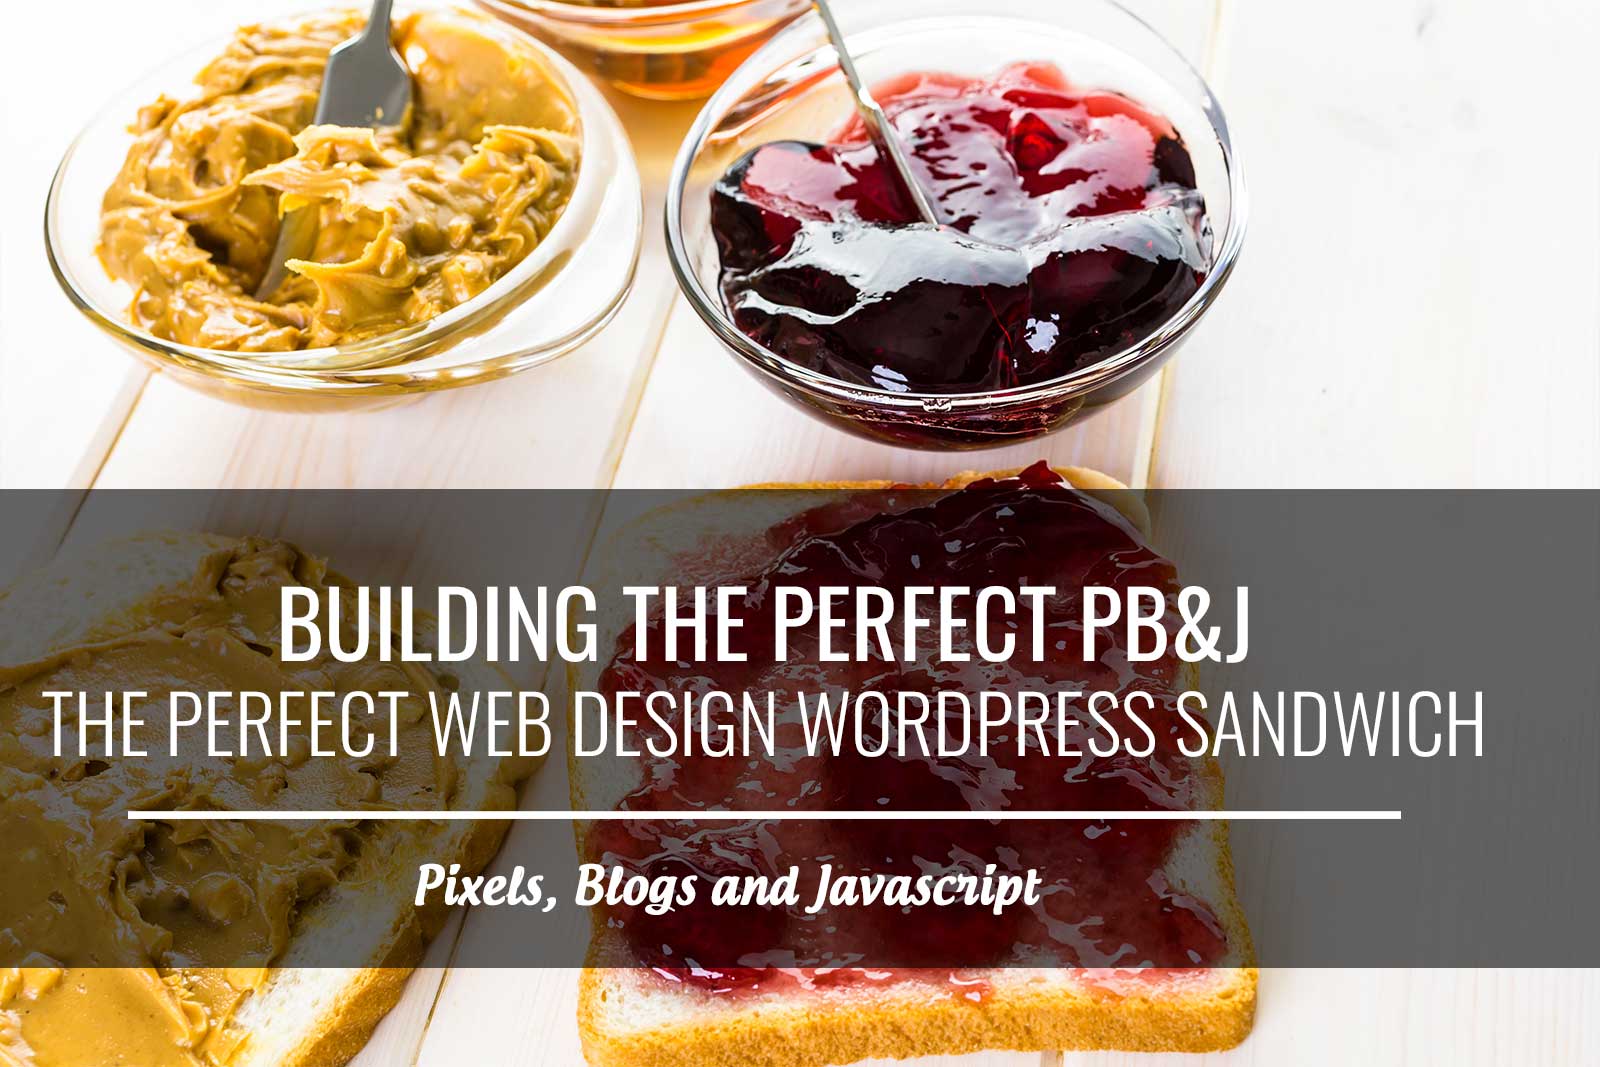 Building the Perfect Web Design PB&J WordPress Sandwich